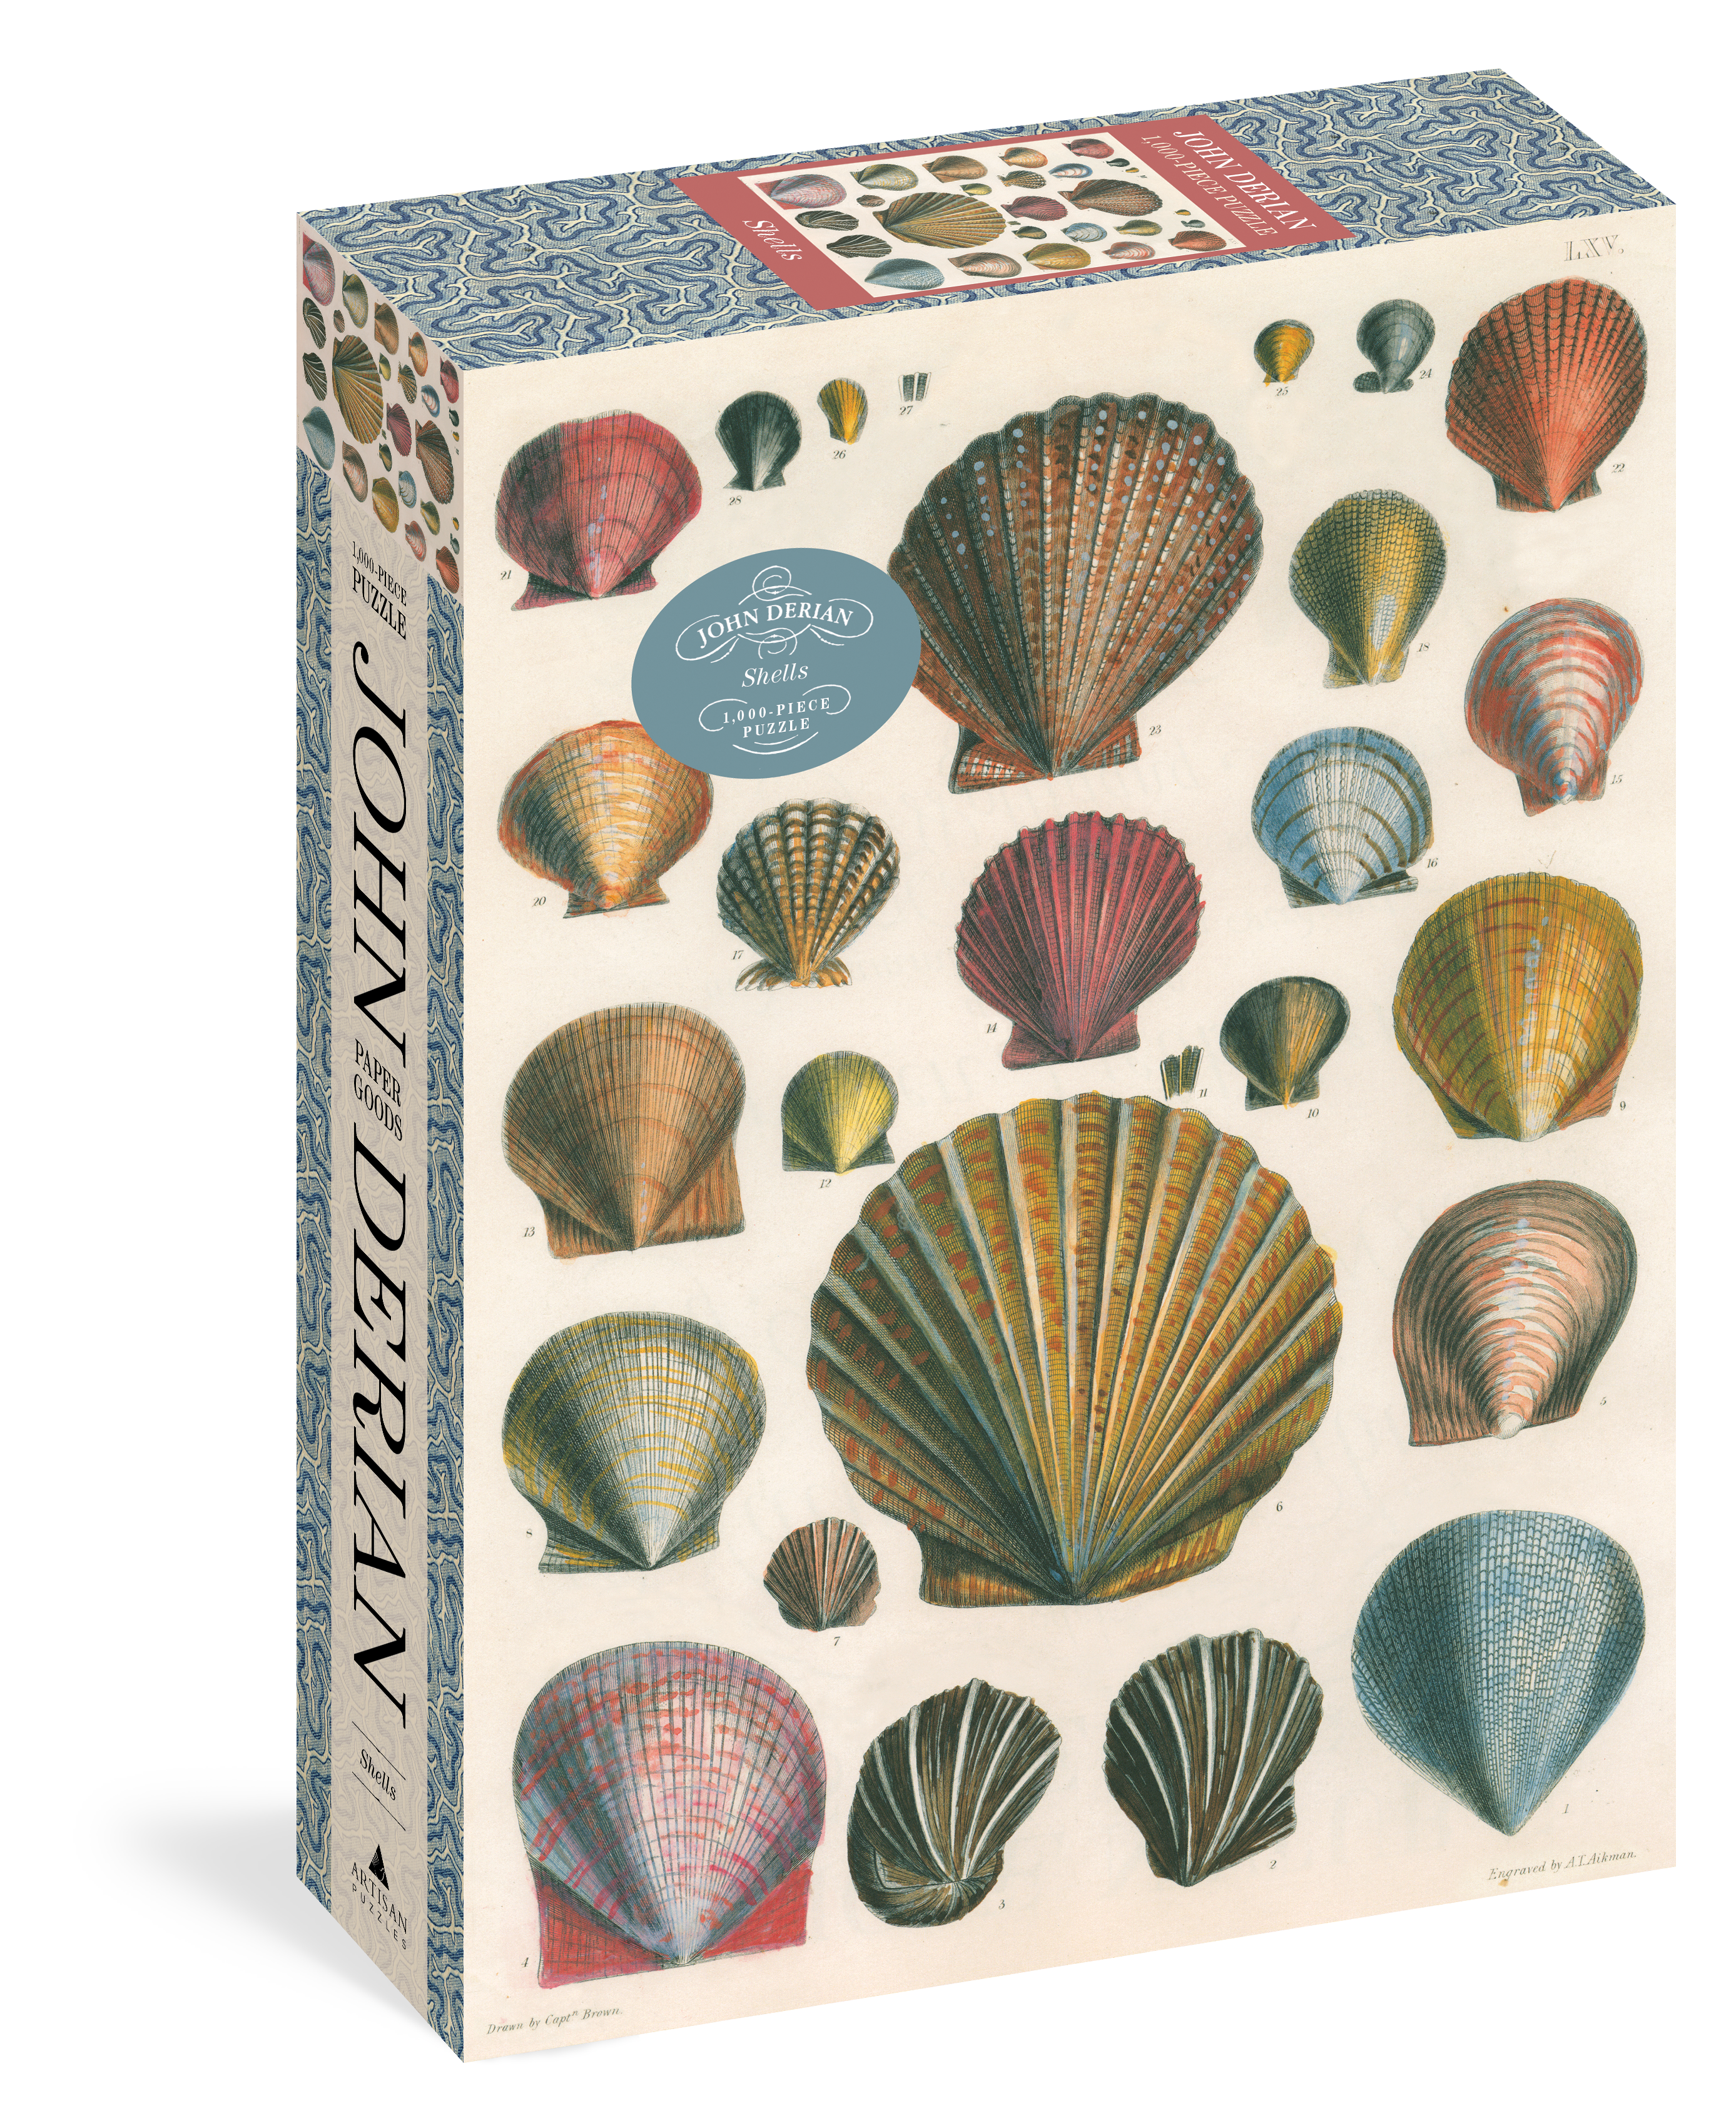 Shells - John Derian - 1000 Piece Puzzle